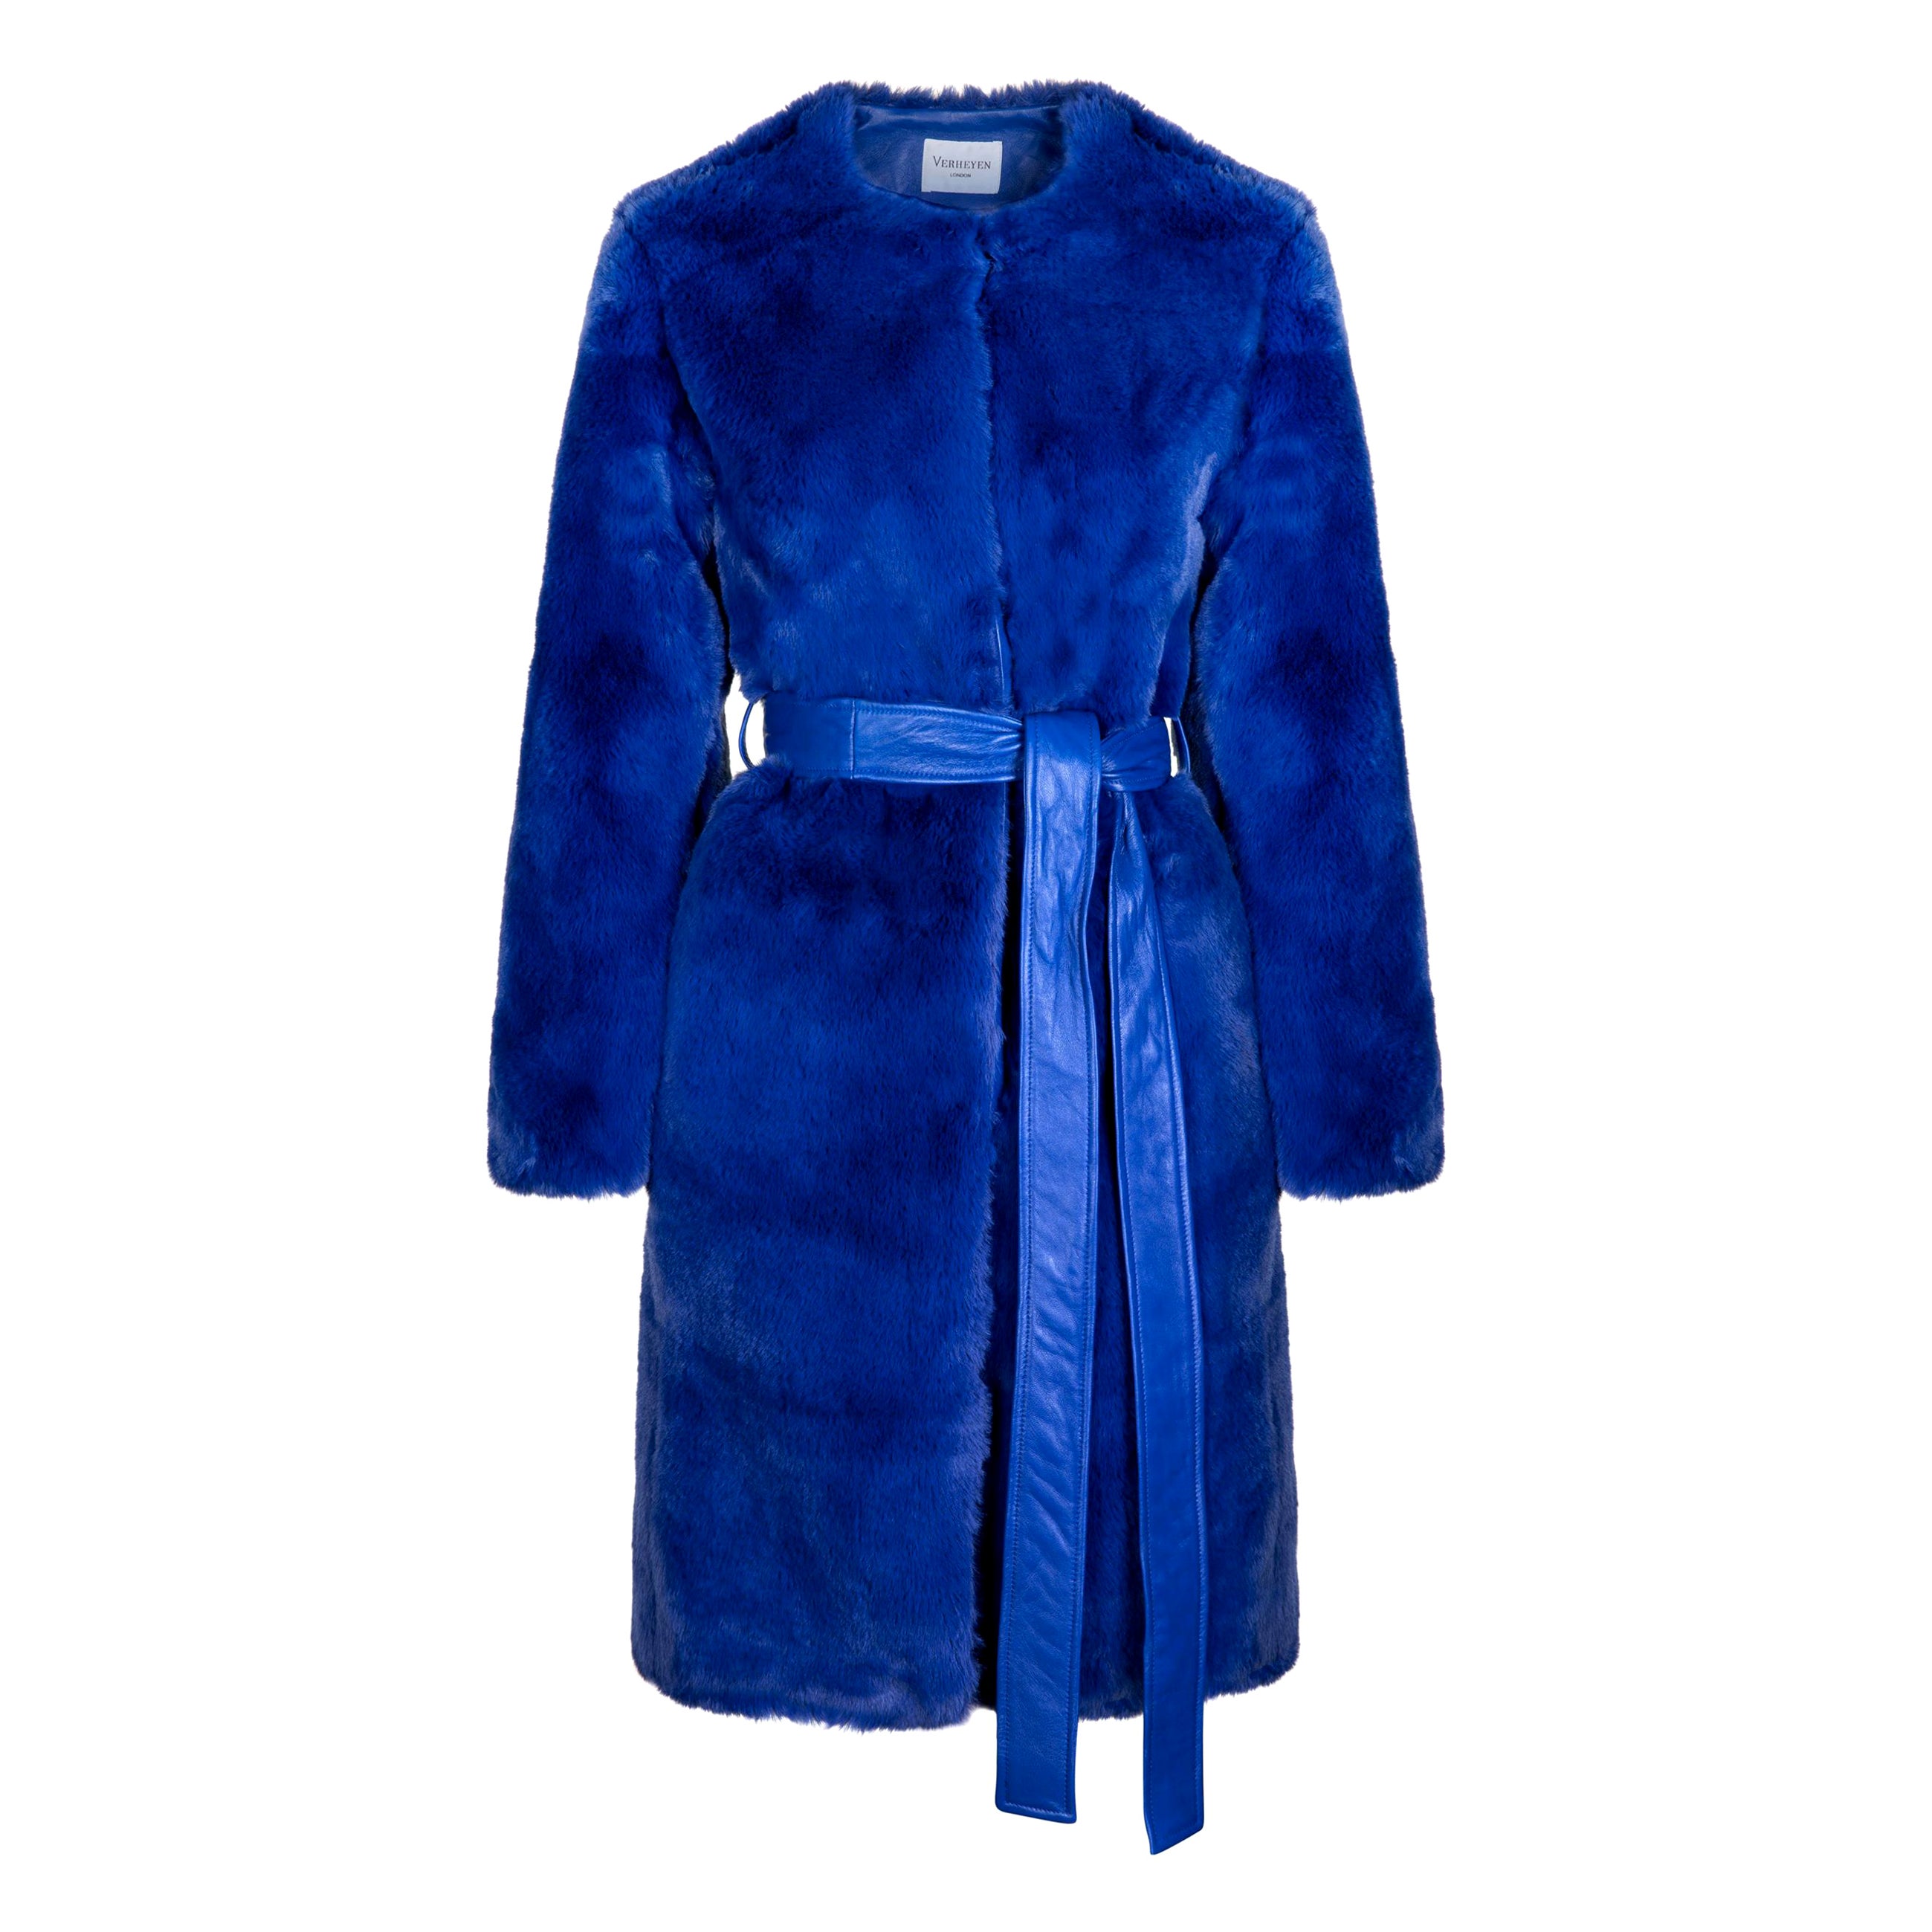 Verheyen London Serena  Collarless Faux Fur Coat in Blue - Size uk 12 